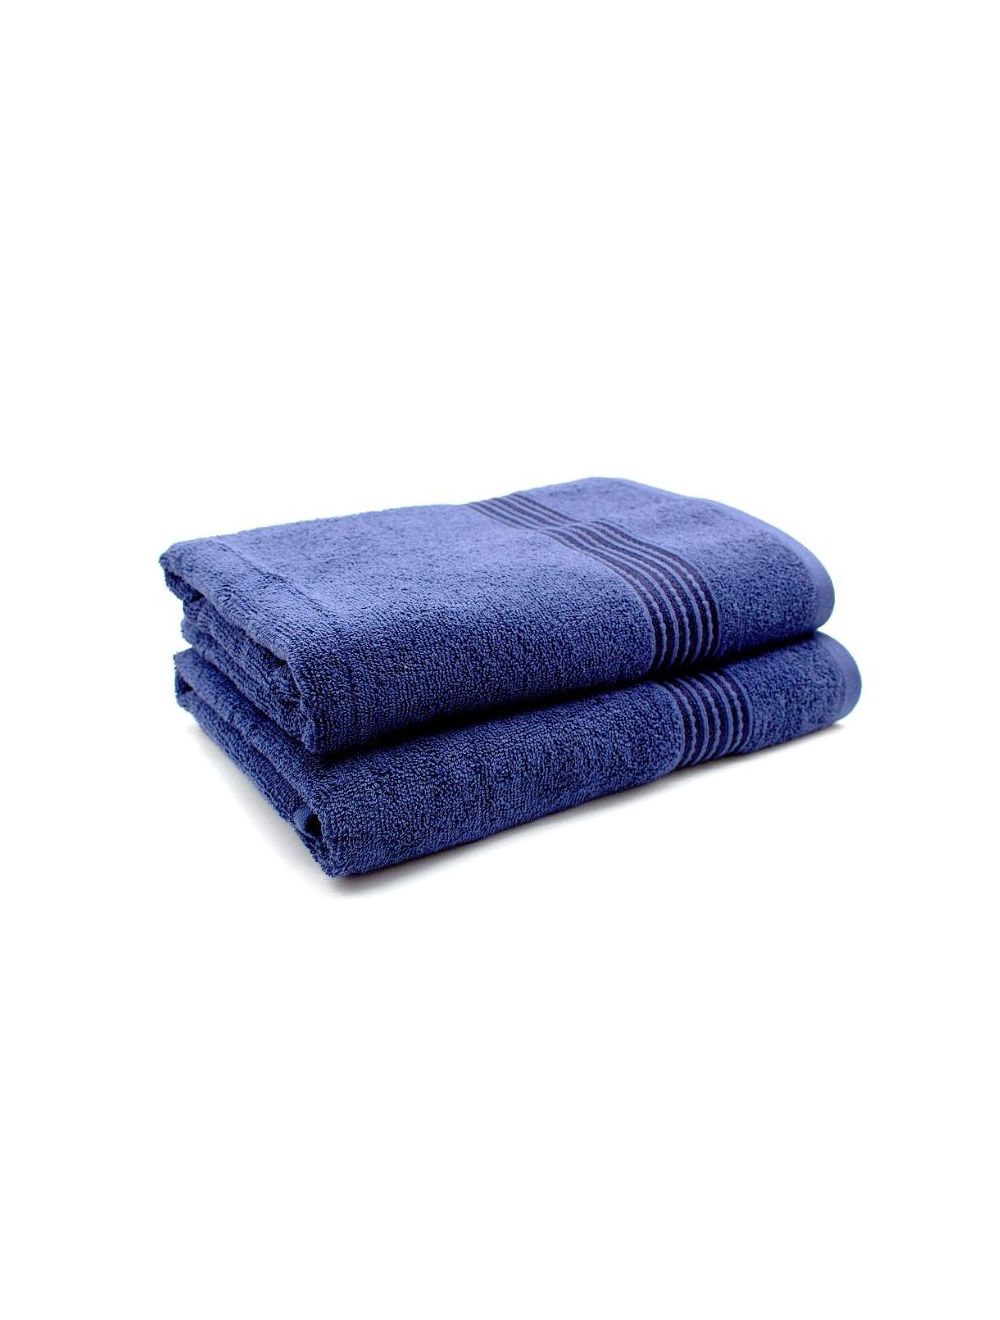 Rahalife 100% Cotton 2-Piece Bath Towel Set, Classic Collection, Blue-14RLBT011